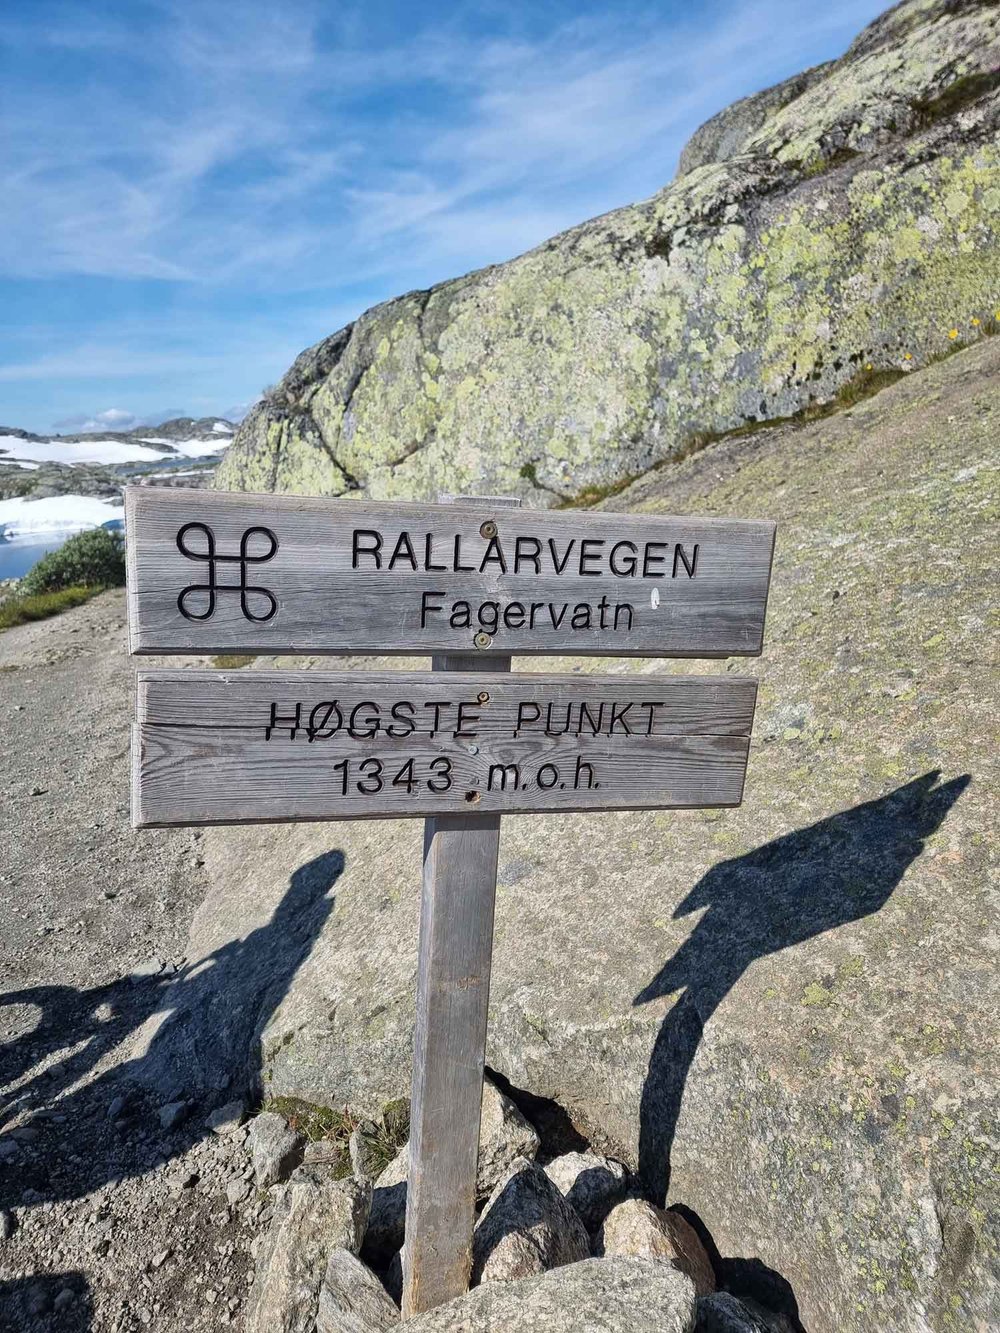 Riding-Rallarvegen-Norways-best-cycle-route-o.jpg